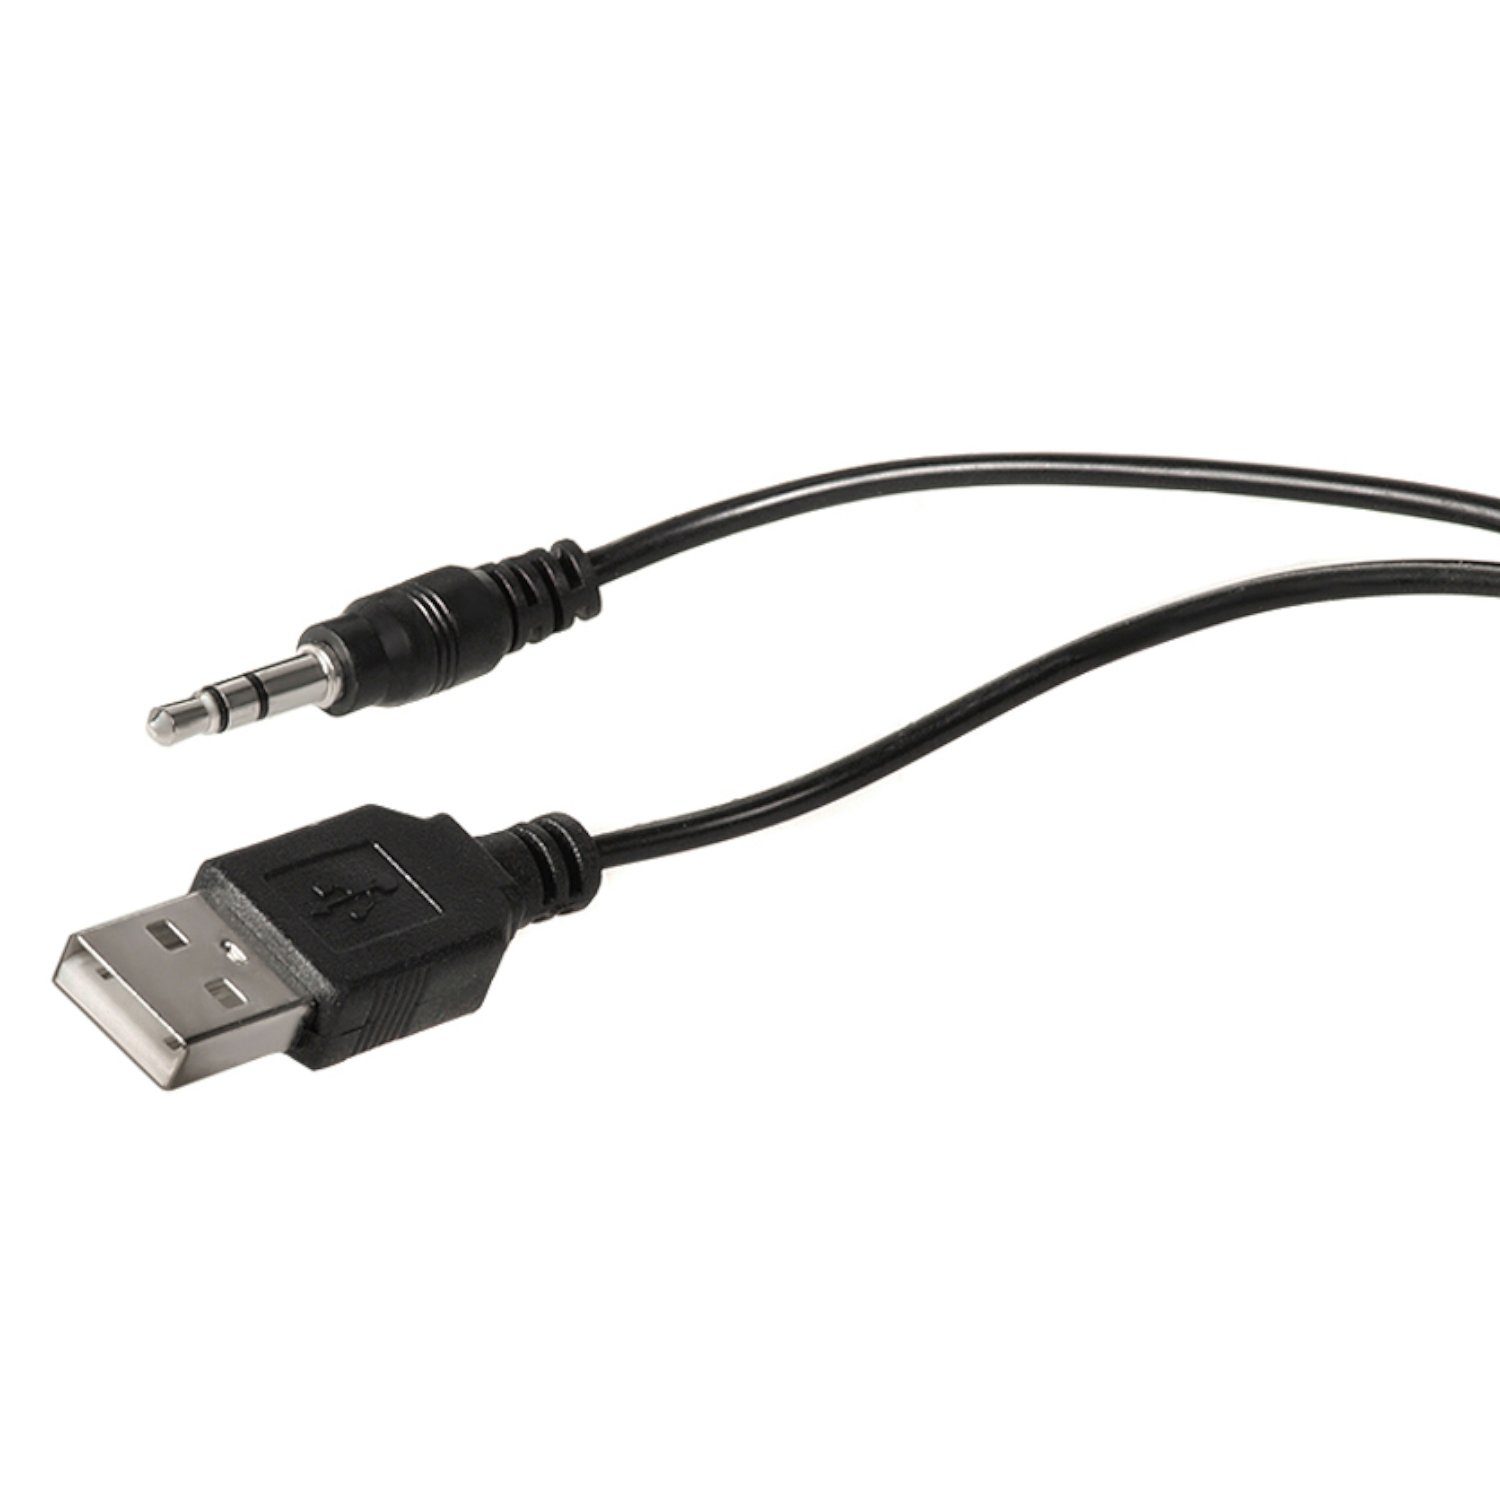 Audiocore AC860 Stereo, 2.0 W, AUX-Kabel, Blaue (USB, PC-Lautsprecher 8 Lautstärkeregelung, LED-Beleuchtung)